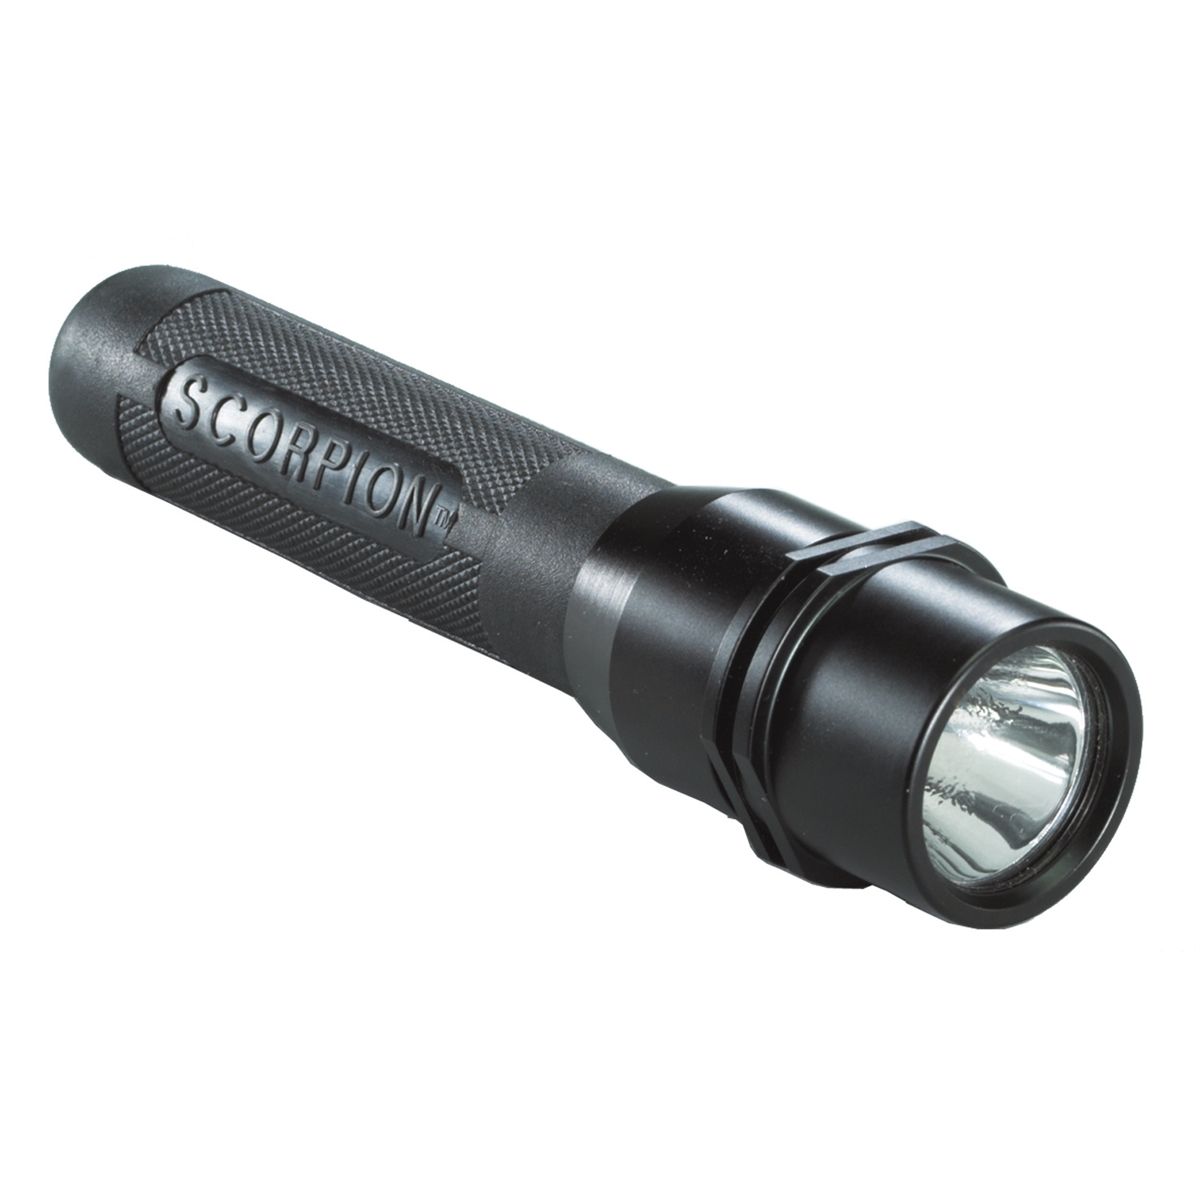 Scorpion LED Flashlight w/ Lithium Batteries